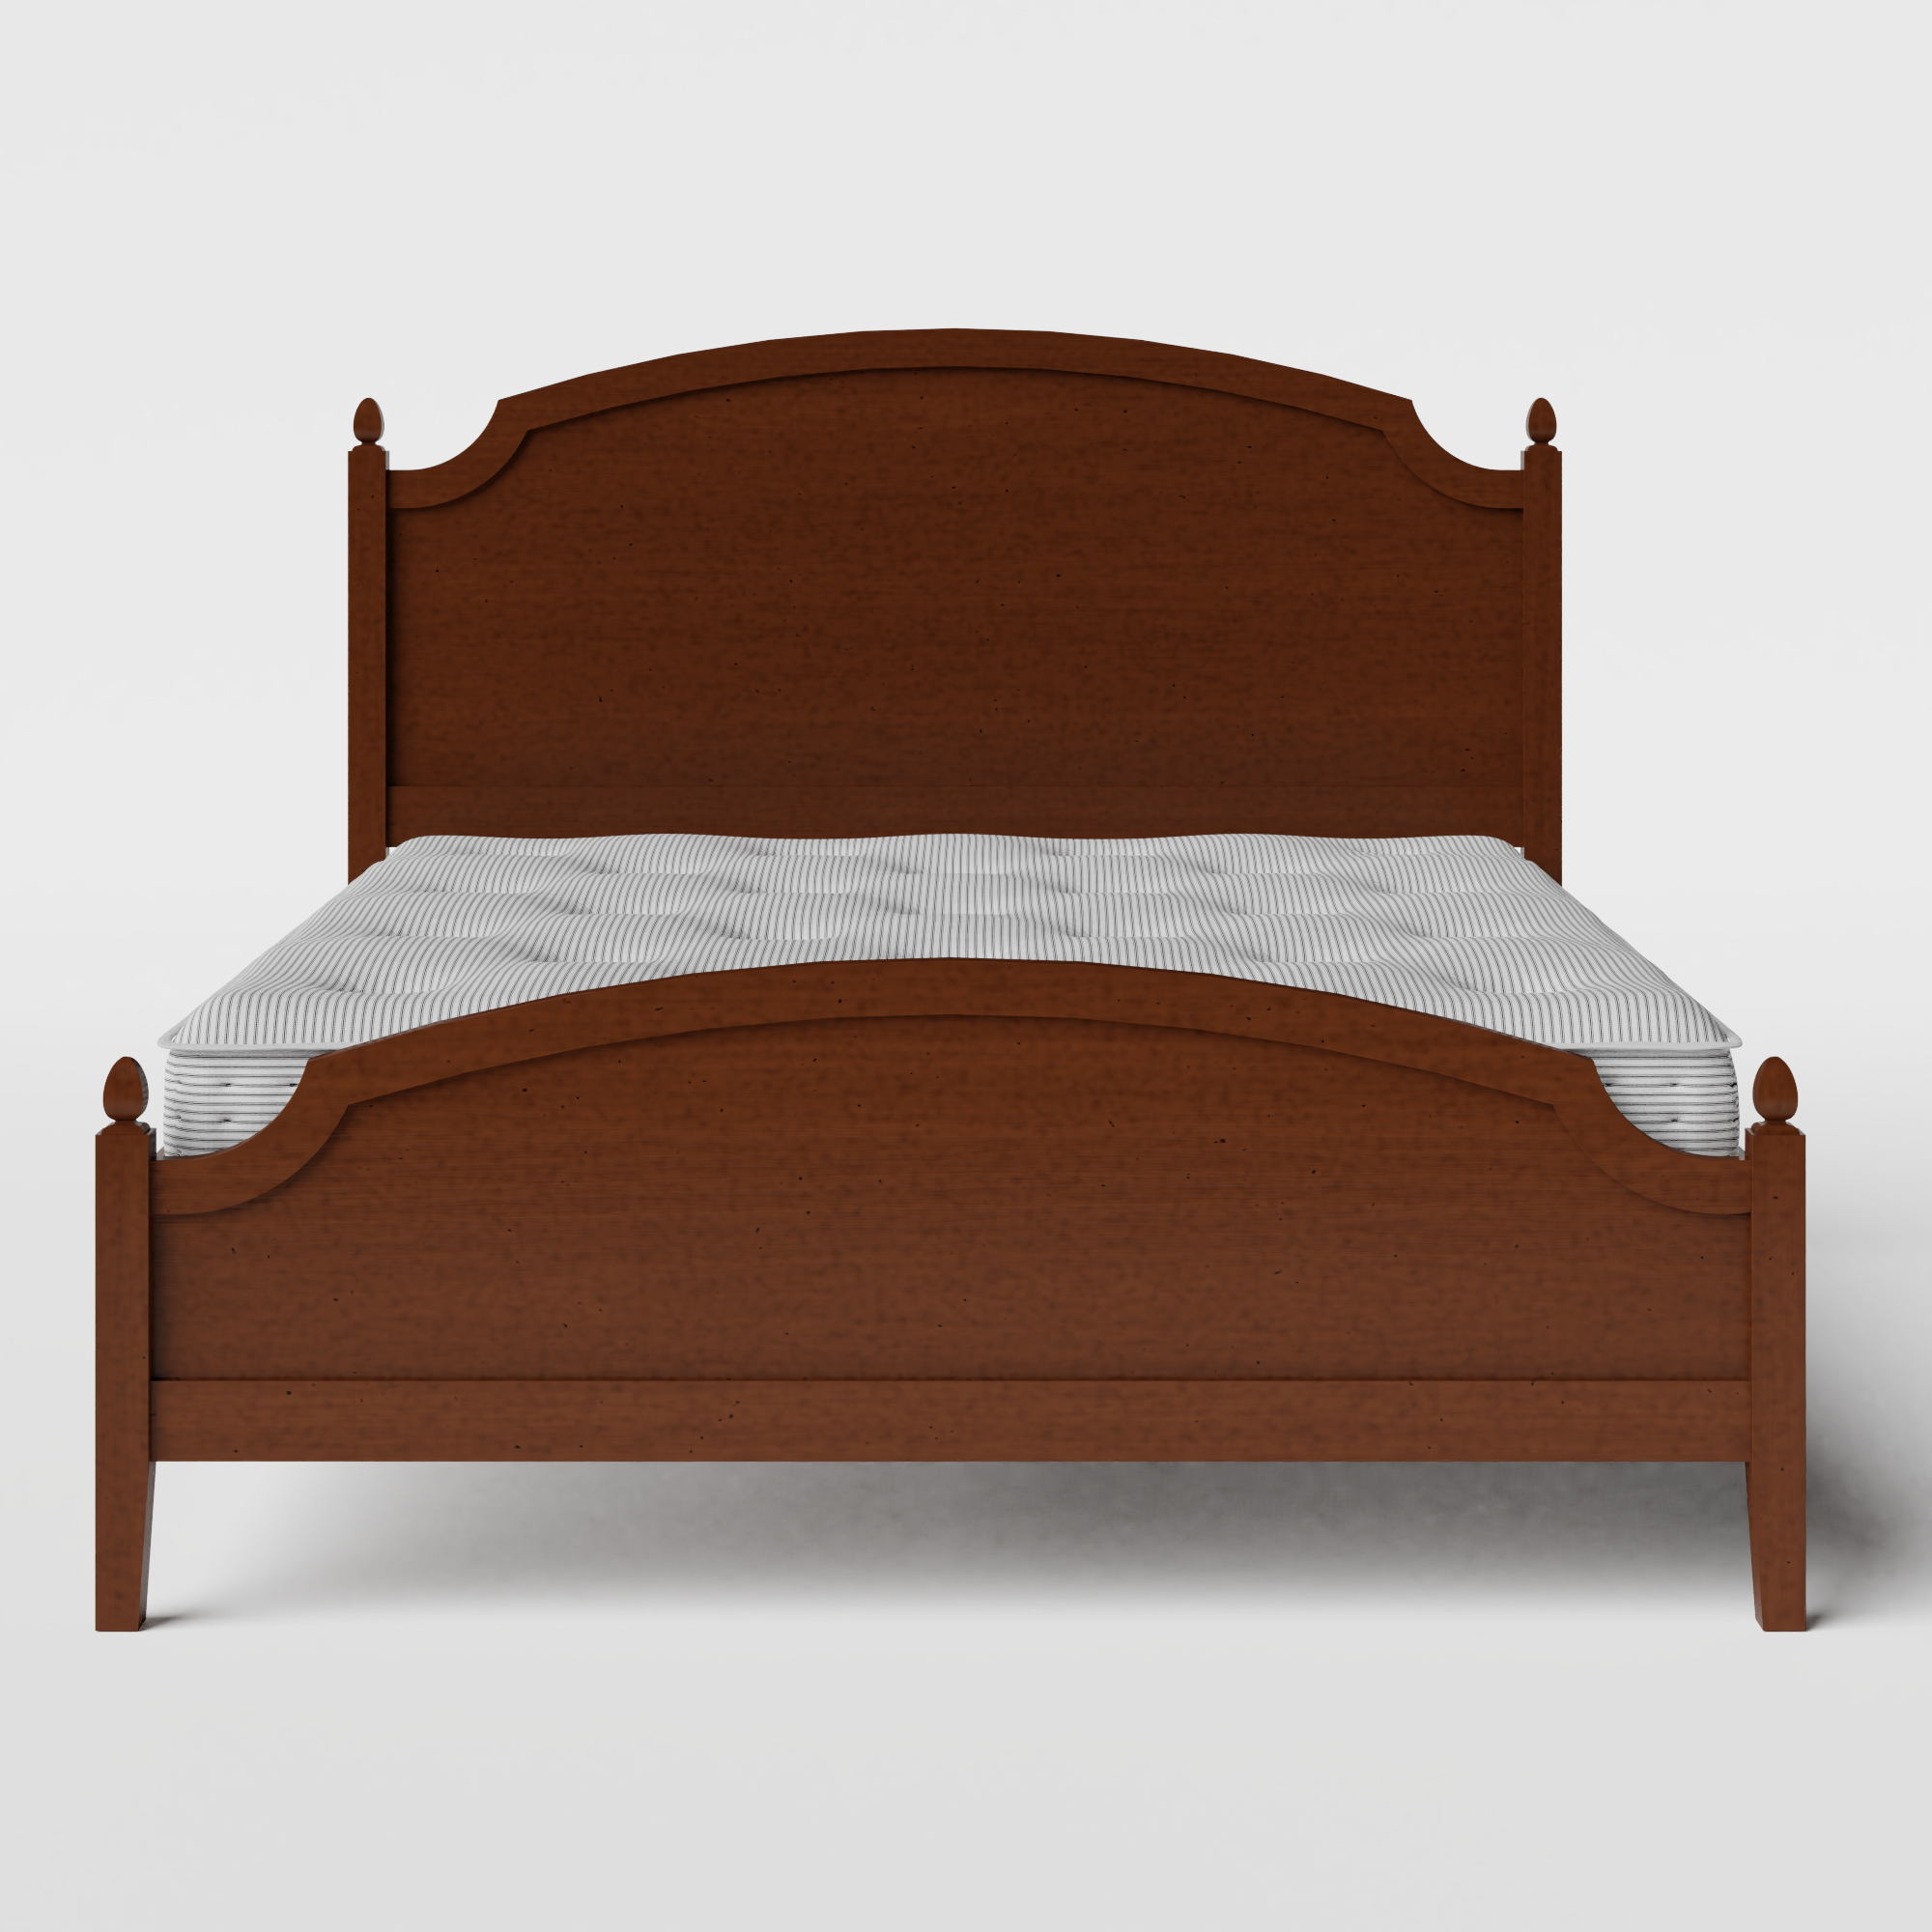 Kipling Low Footend wood bed in dark cherry with Juno mattress